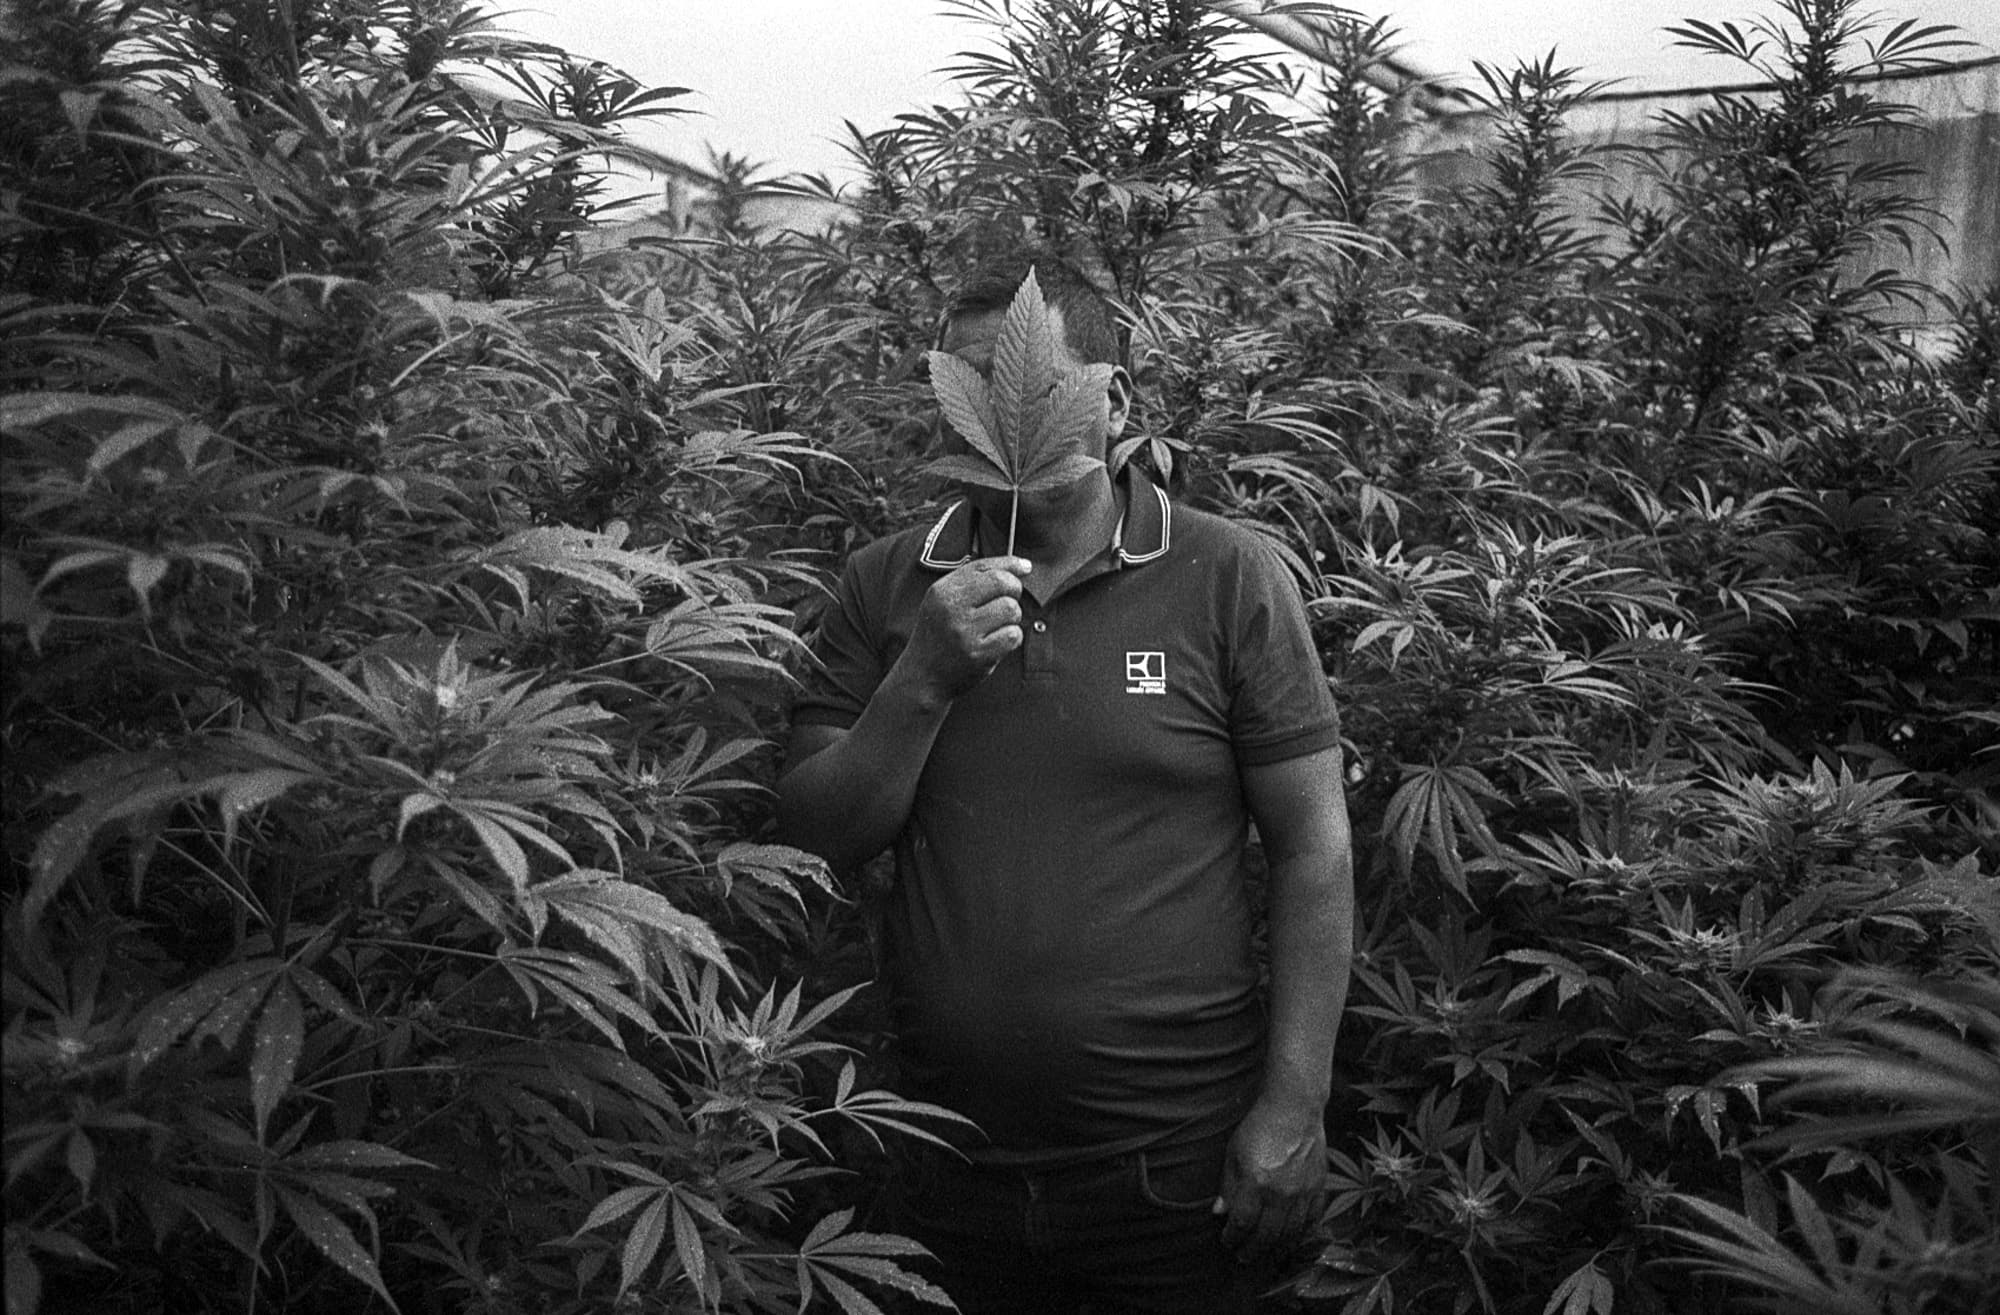 Cómo saber si la marihuana es buena – I Wanna Grow